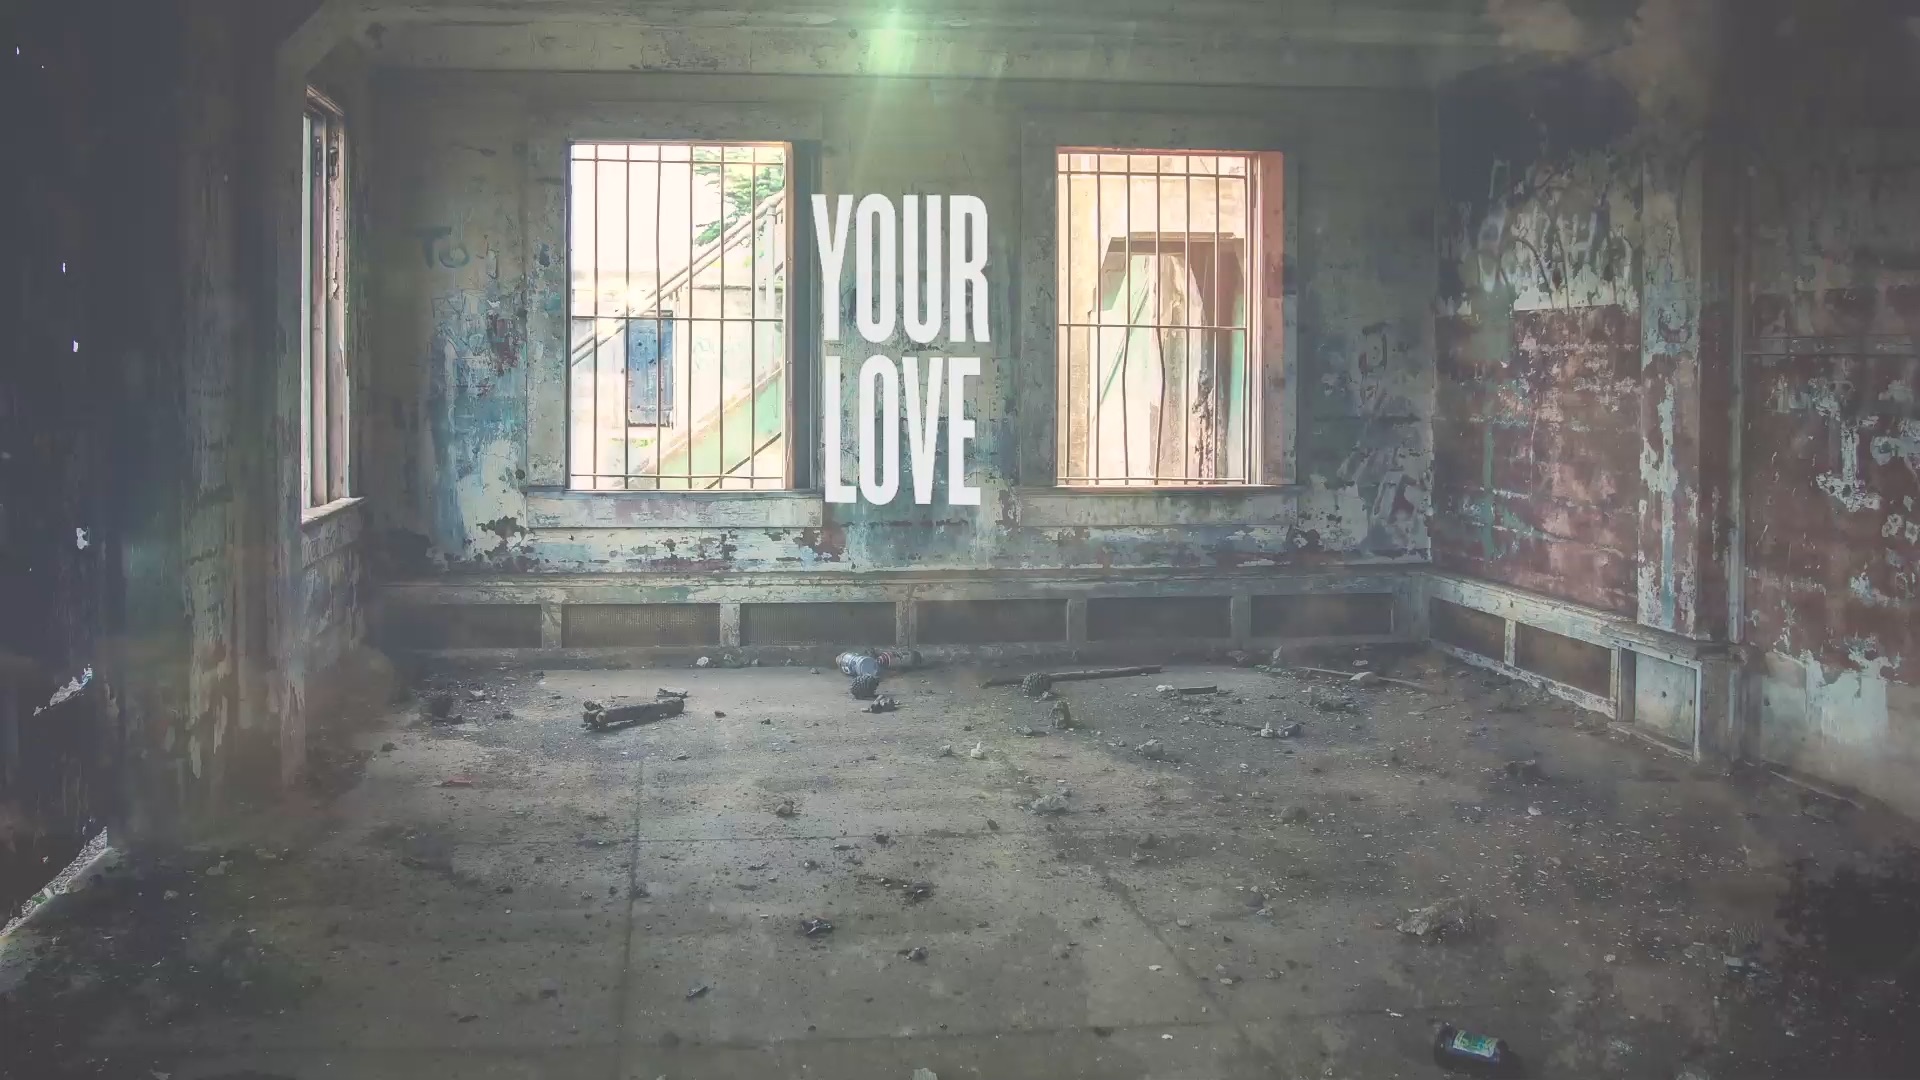 Your Love Defends Me - [Lyric Video] Matt Maher 